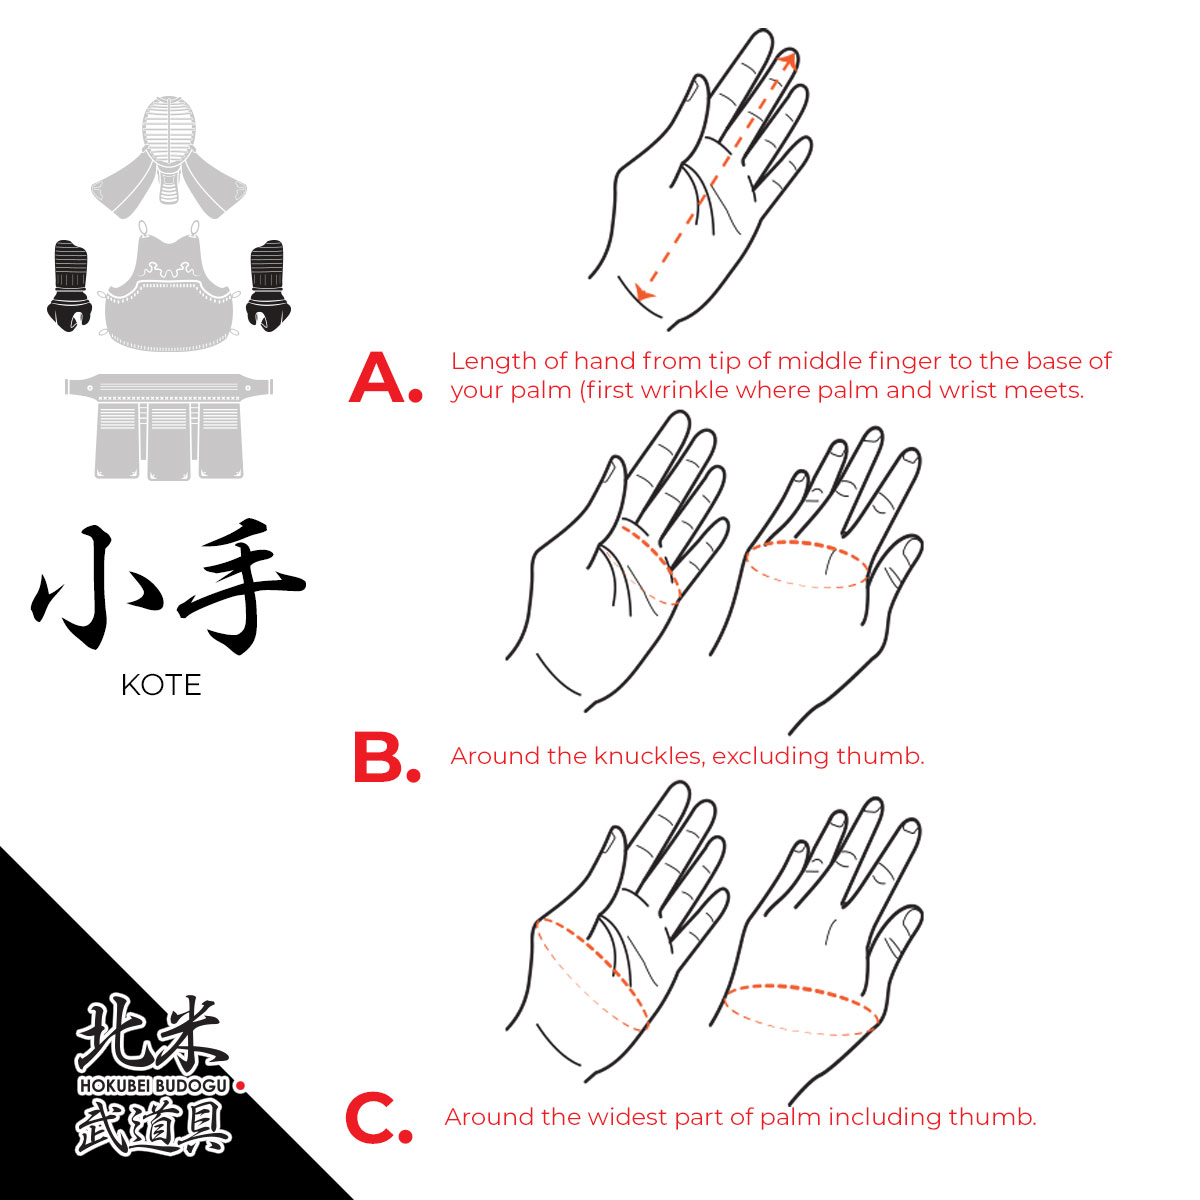 Hokubei Budogu - Kendo Shop in USA - How to measure bogu - kote